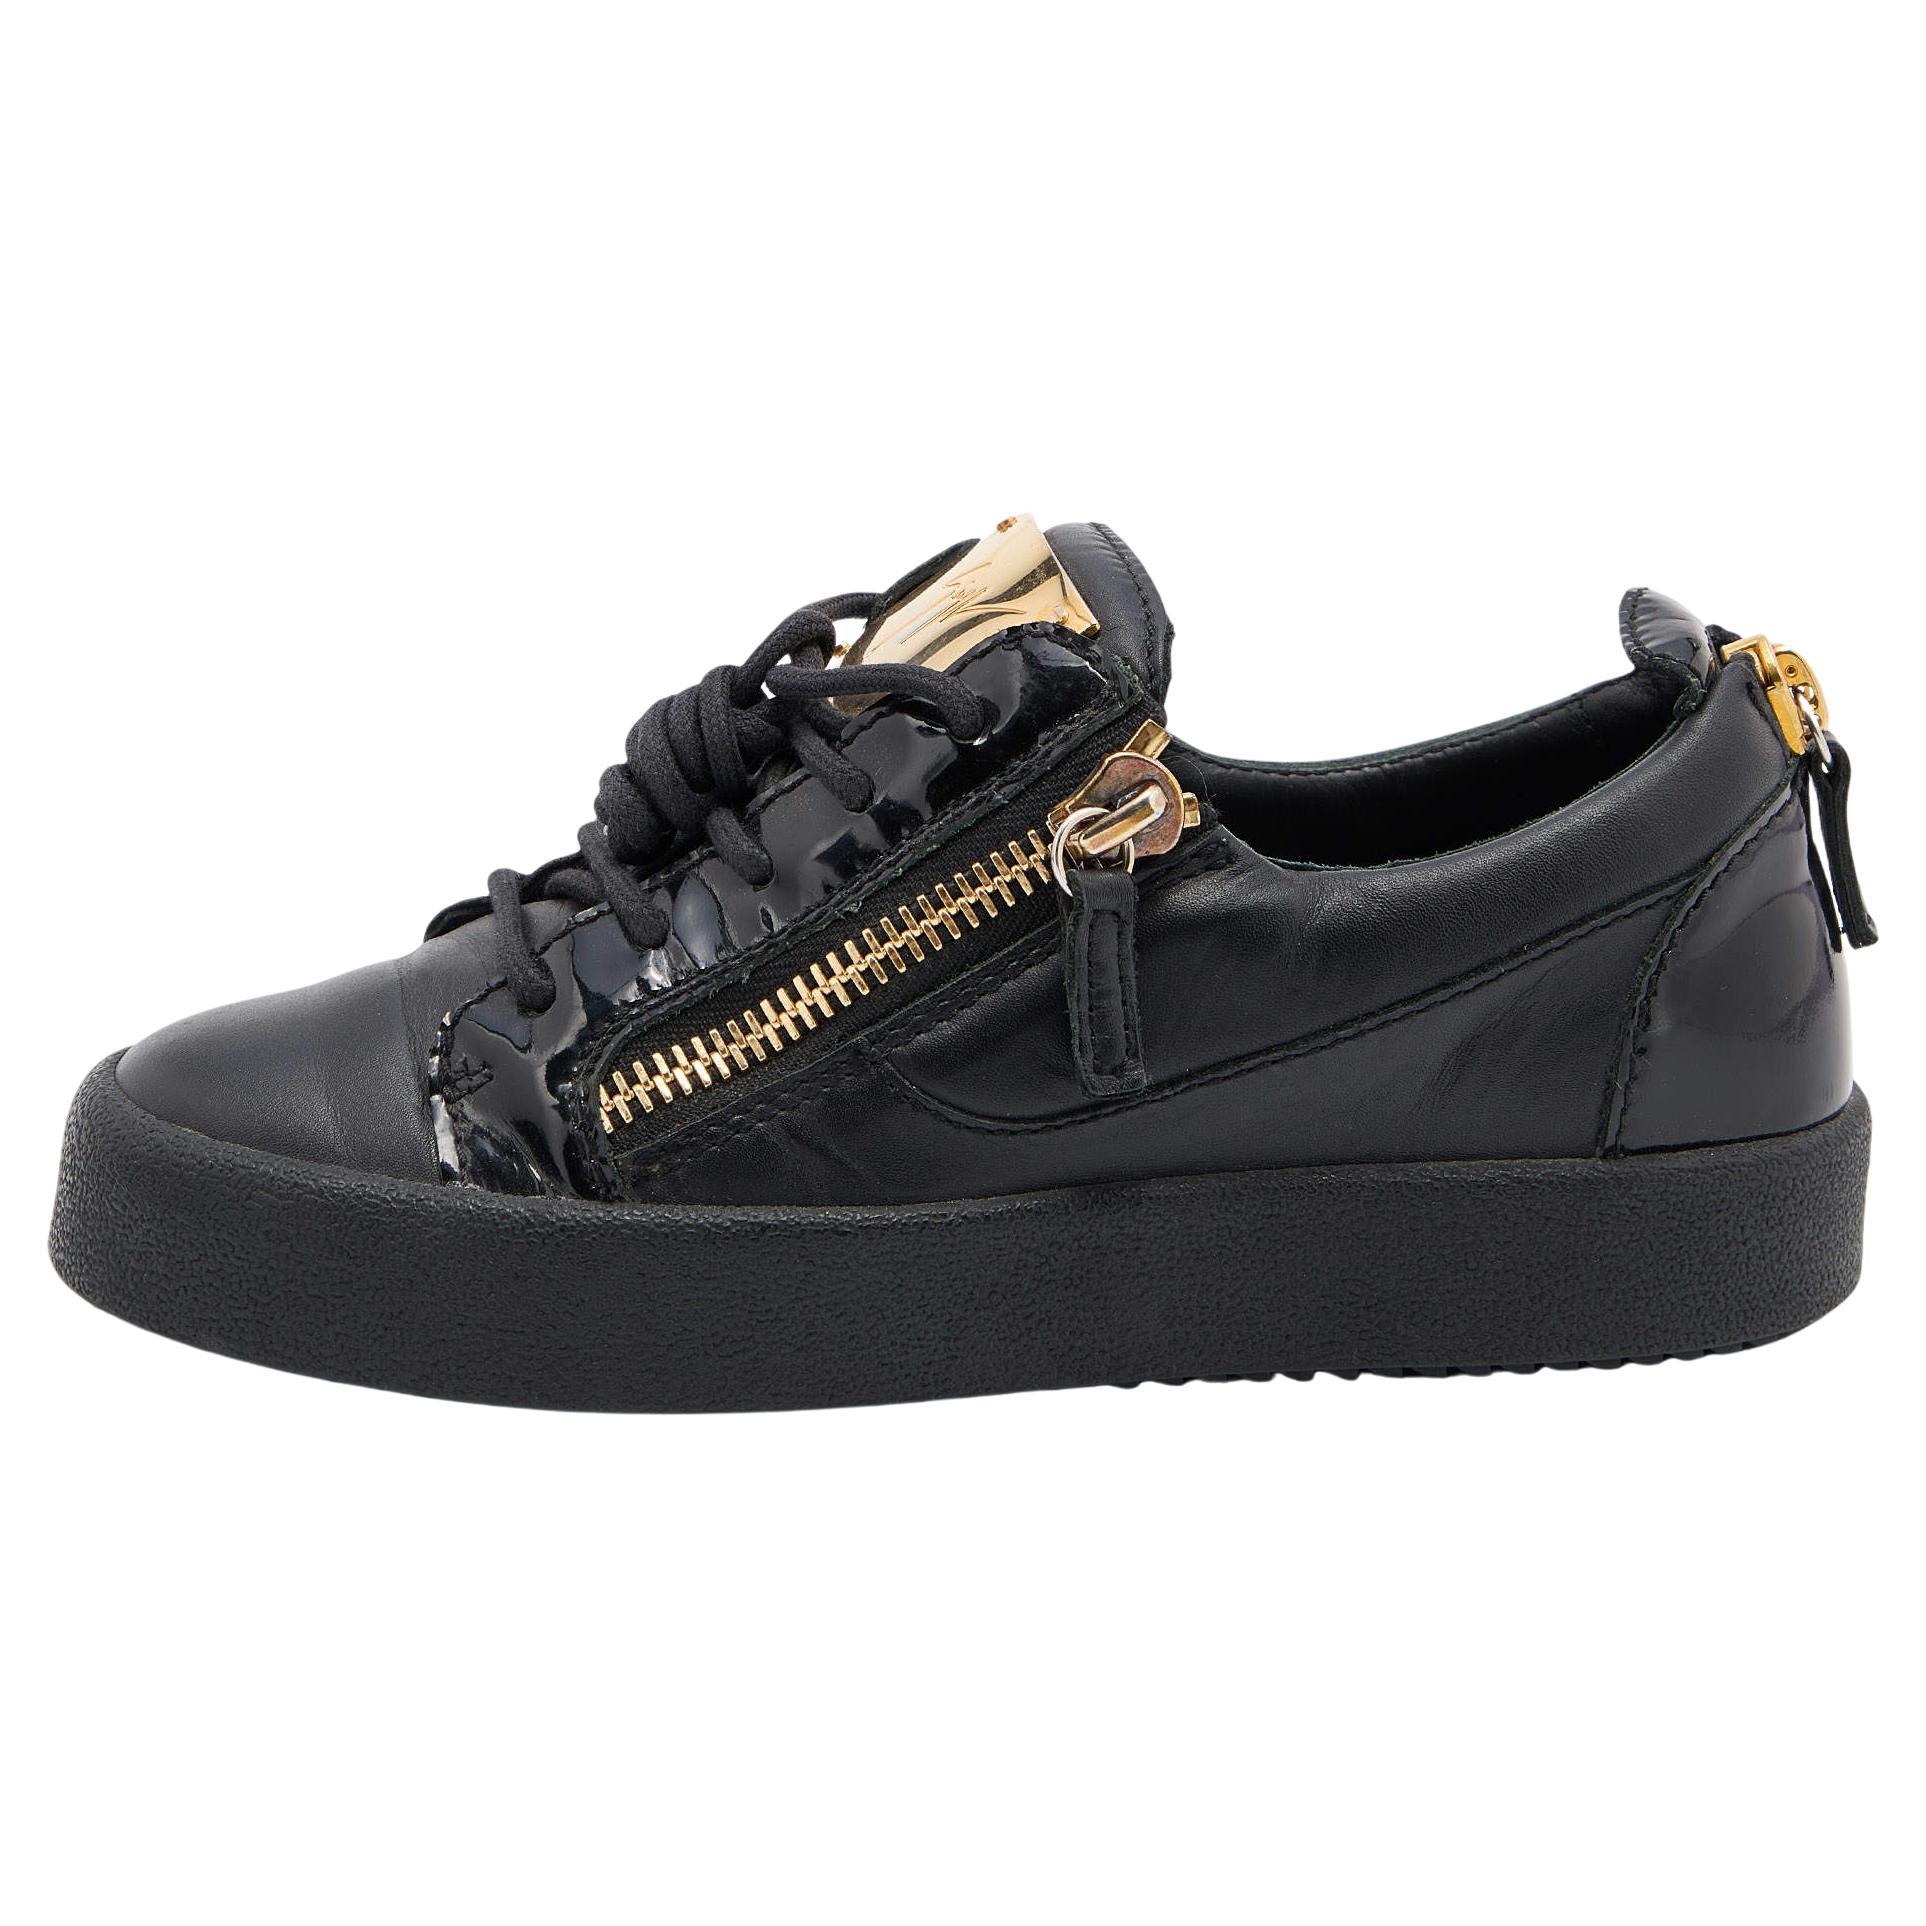 Giuseppe Zanotti Black Leather Gail Low Top Sneakers Size 36